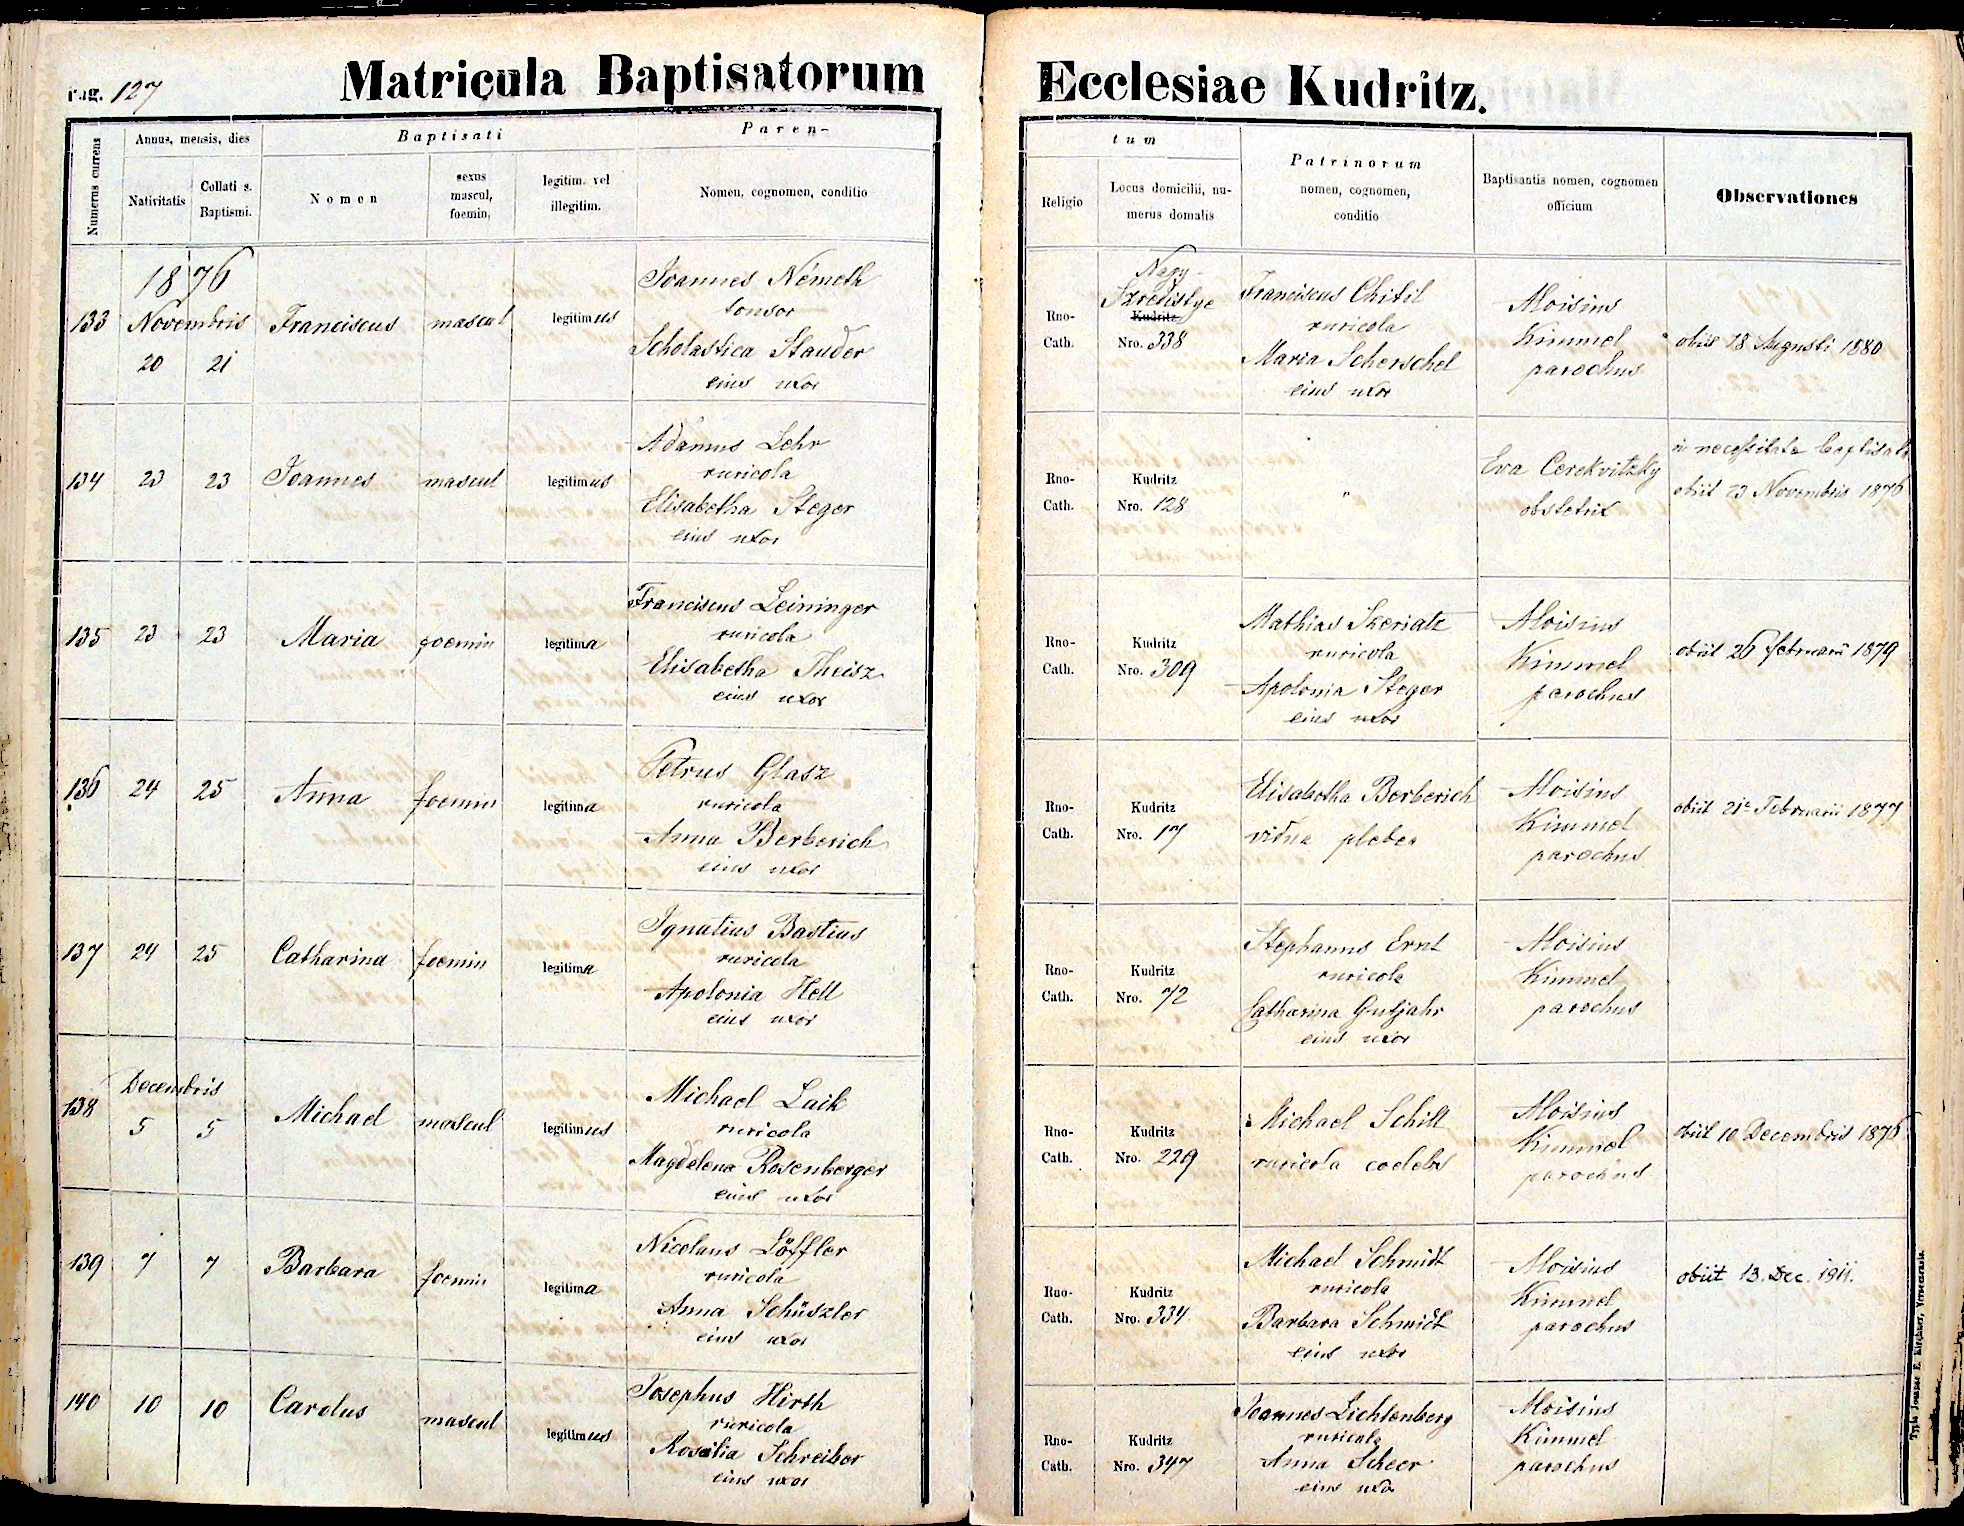 images/church_records/BIRTHS/1870-1879B/1876/127